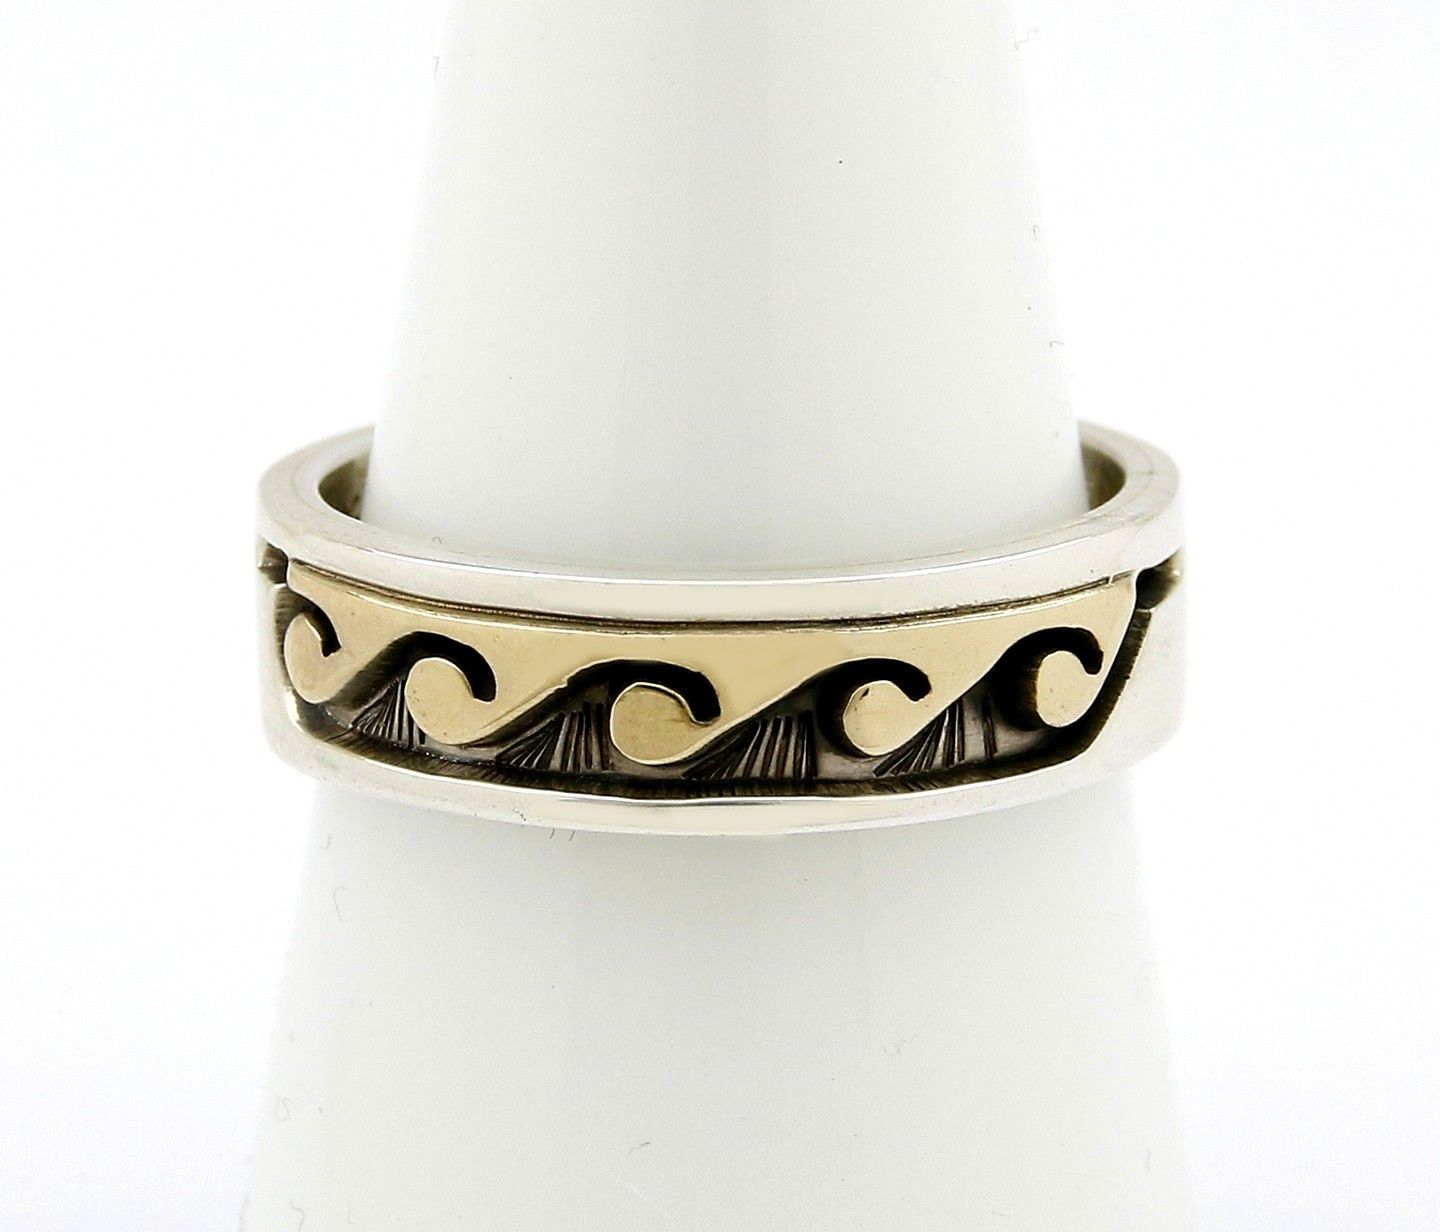 Navajo American Indian Scott Skeets Handmade 14k SOLID Gold & .925 Silver Ring